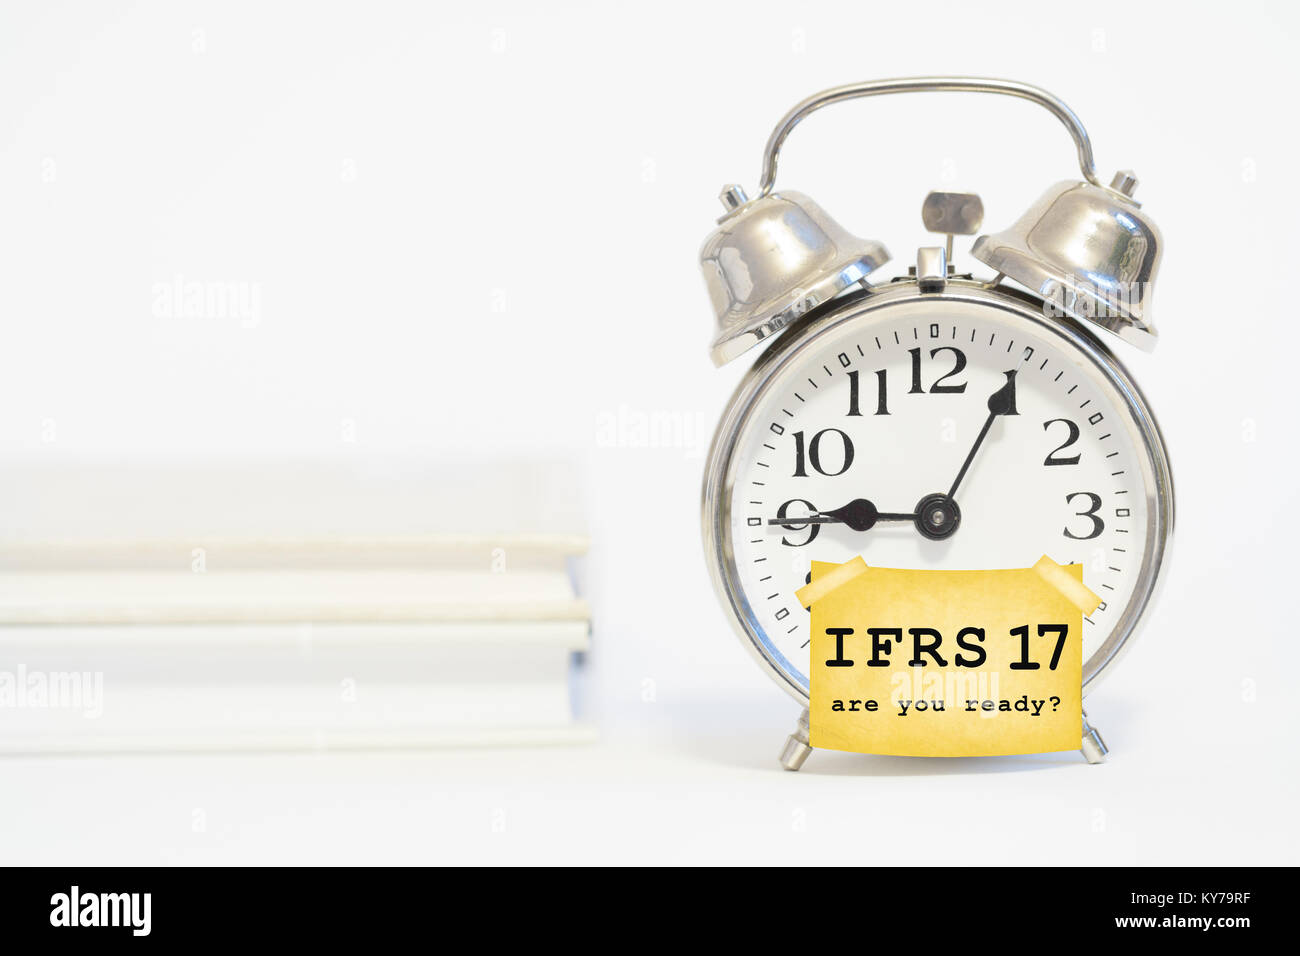 Ifrs 17 Insurance Accounting Standard Stockfoto